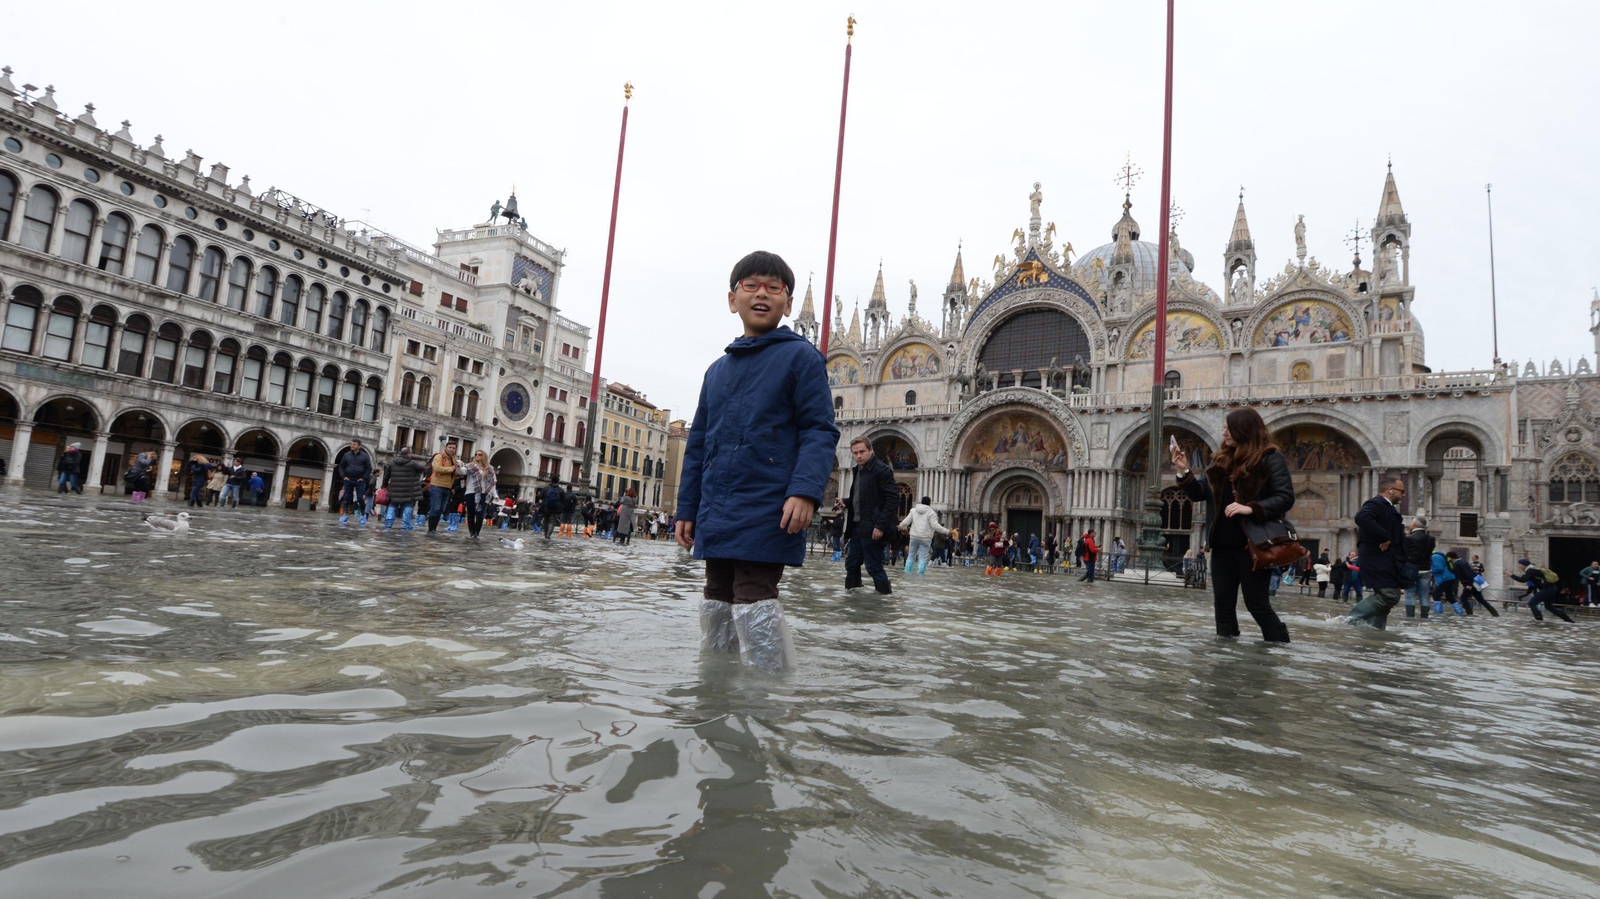 Devastated Venice braced for third major flood